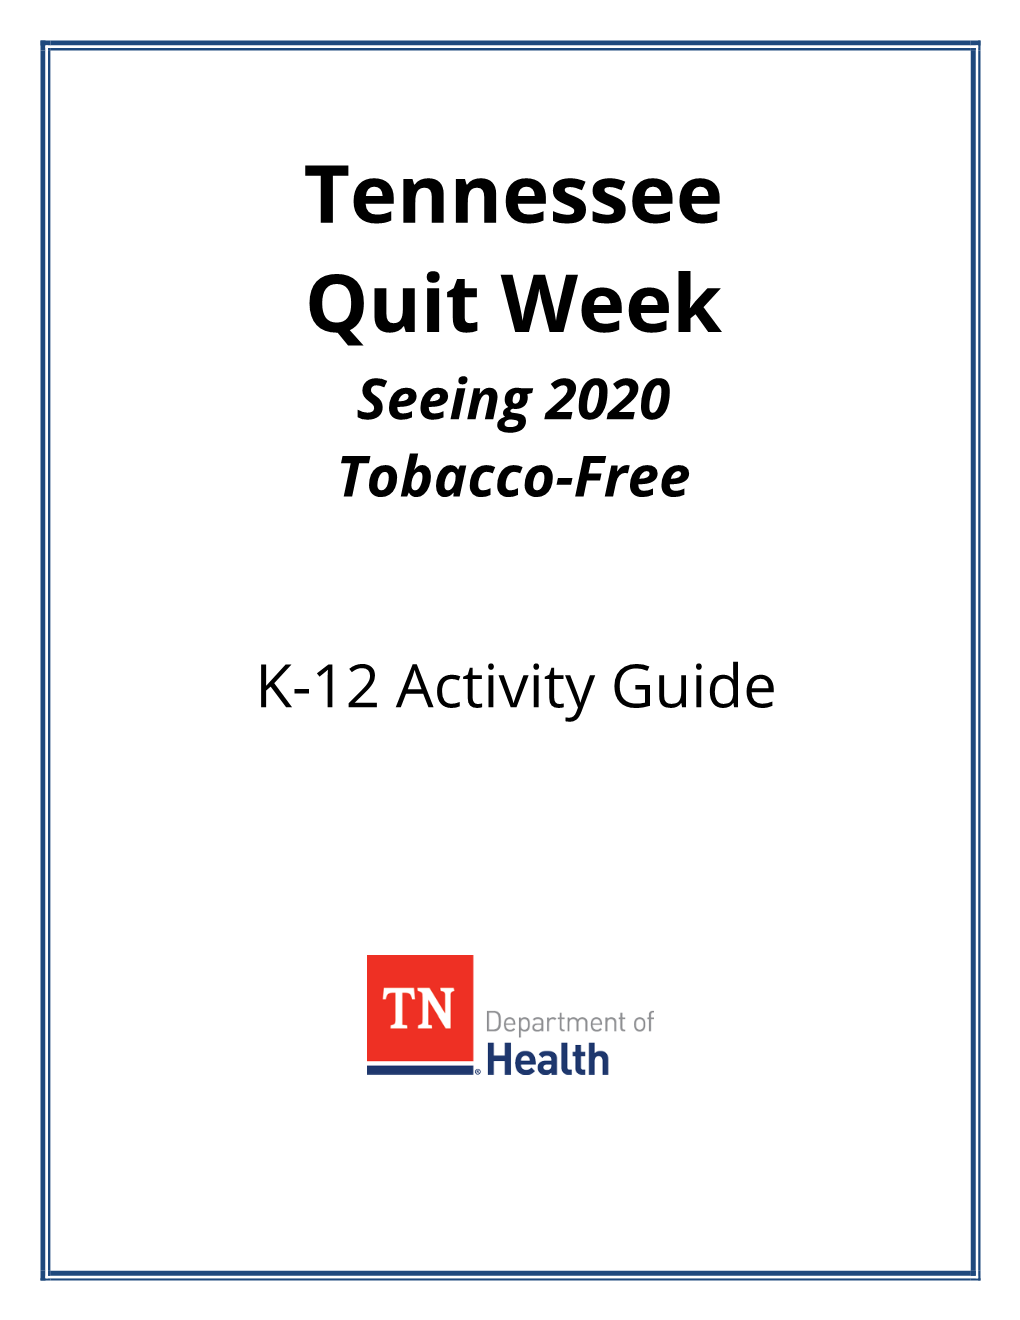 Tennessee Quit Week Seeing 2020 Tobacco-Free